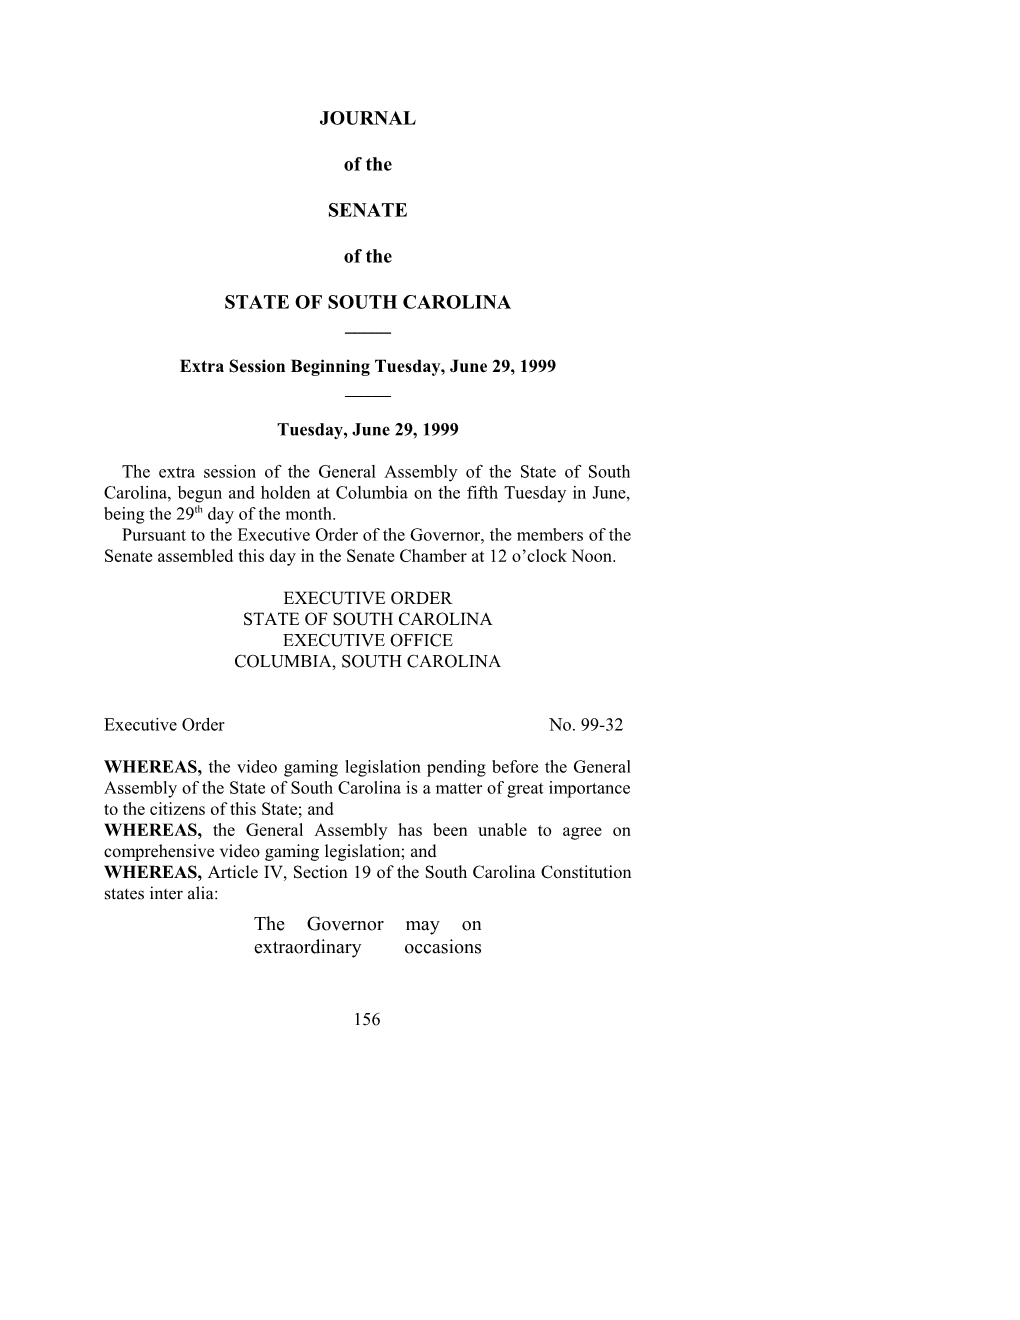 Senate Journal for June 29, 1999 - South Carolina Legislature Online